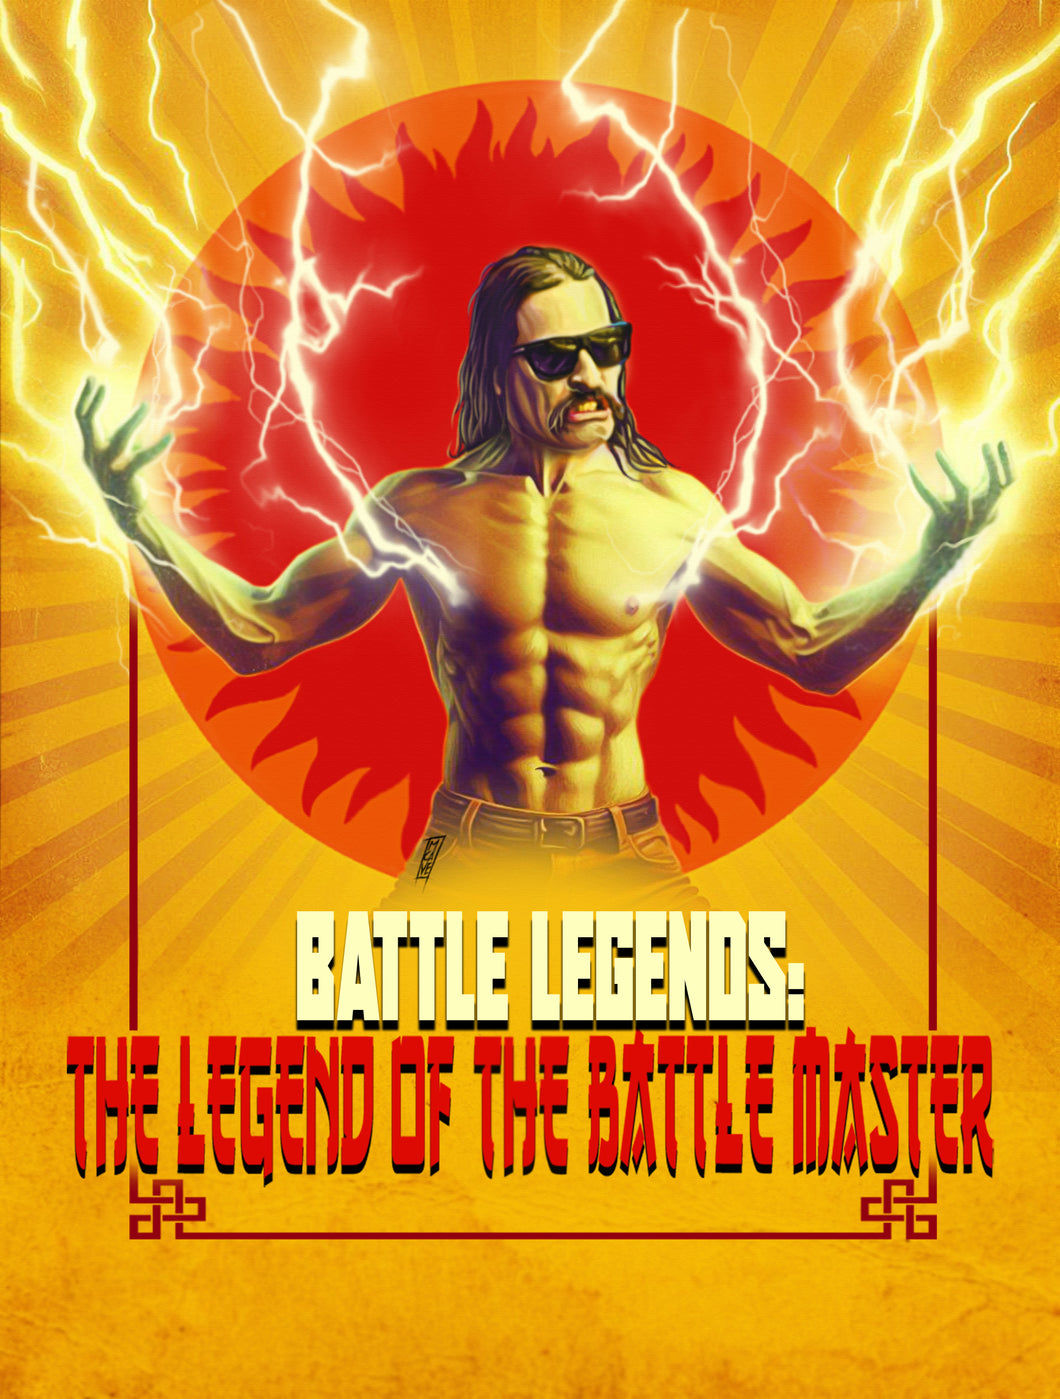 Battle Legends: Legend of the Battle Master Blu-ray (w/ signed copy option)